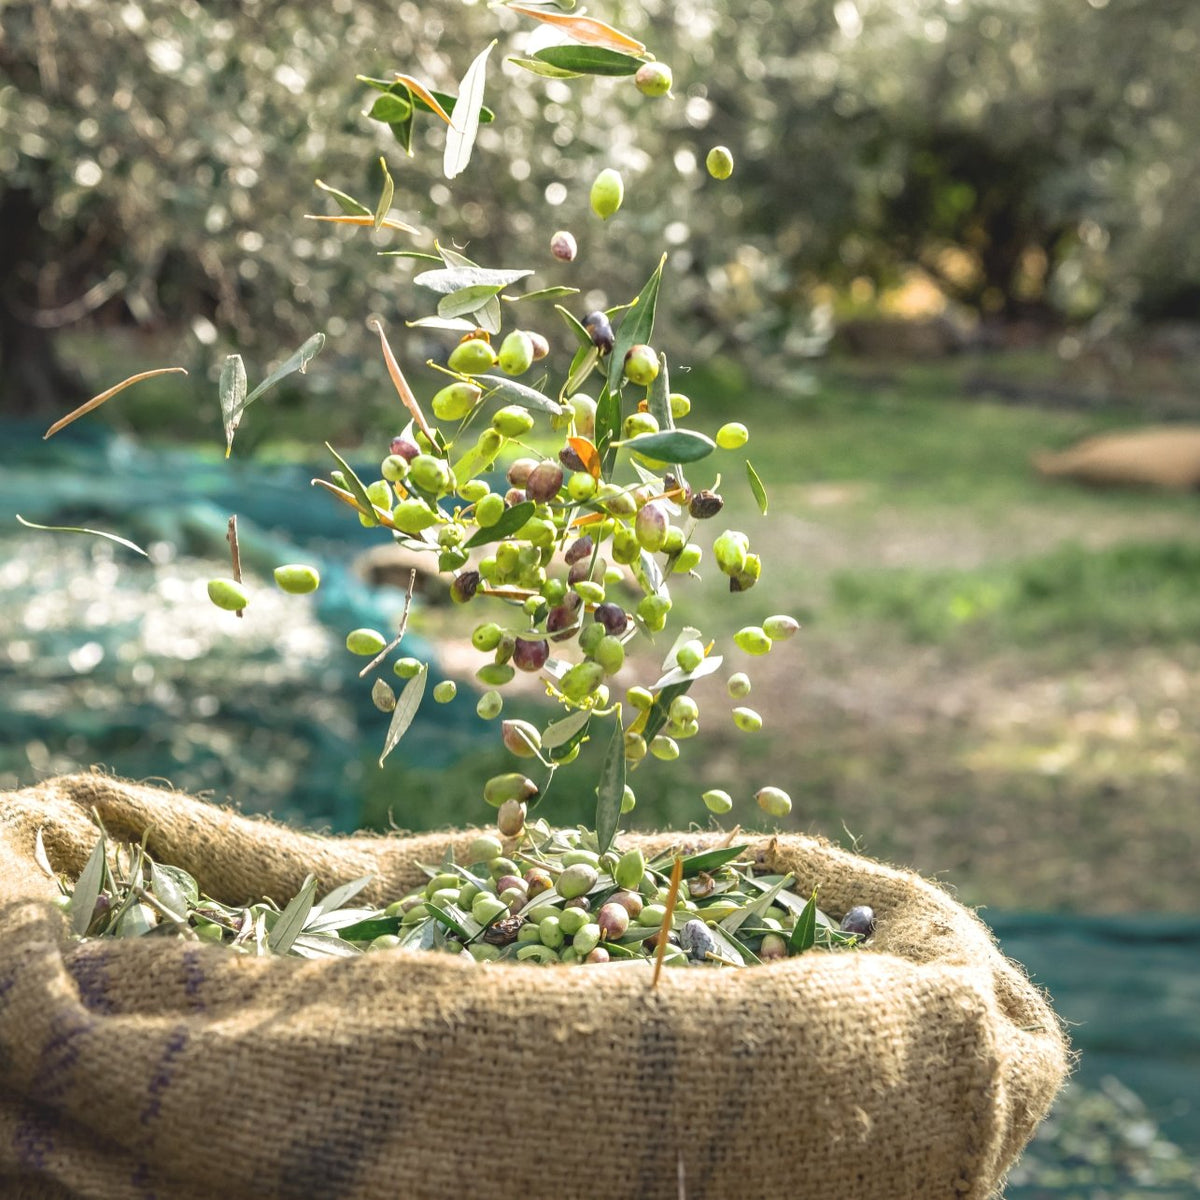 Mediterranean Olive Oil - Revity Farms